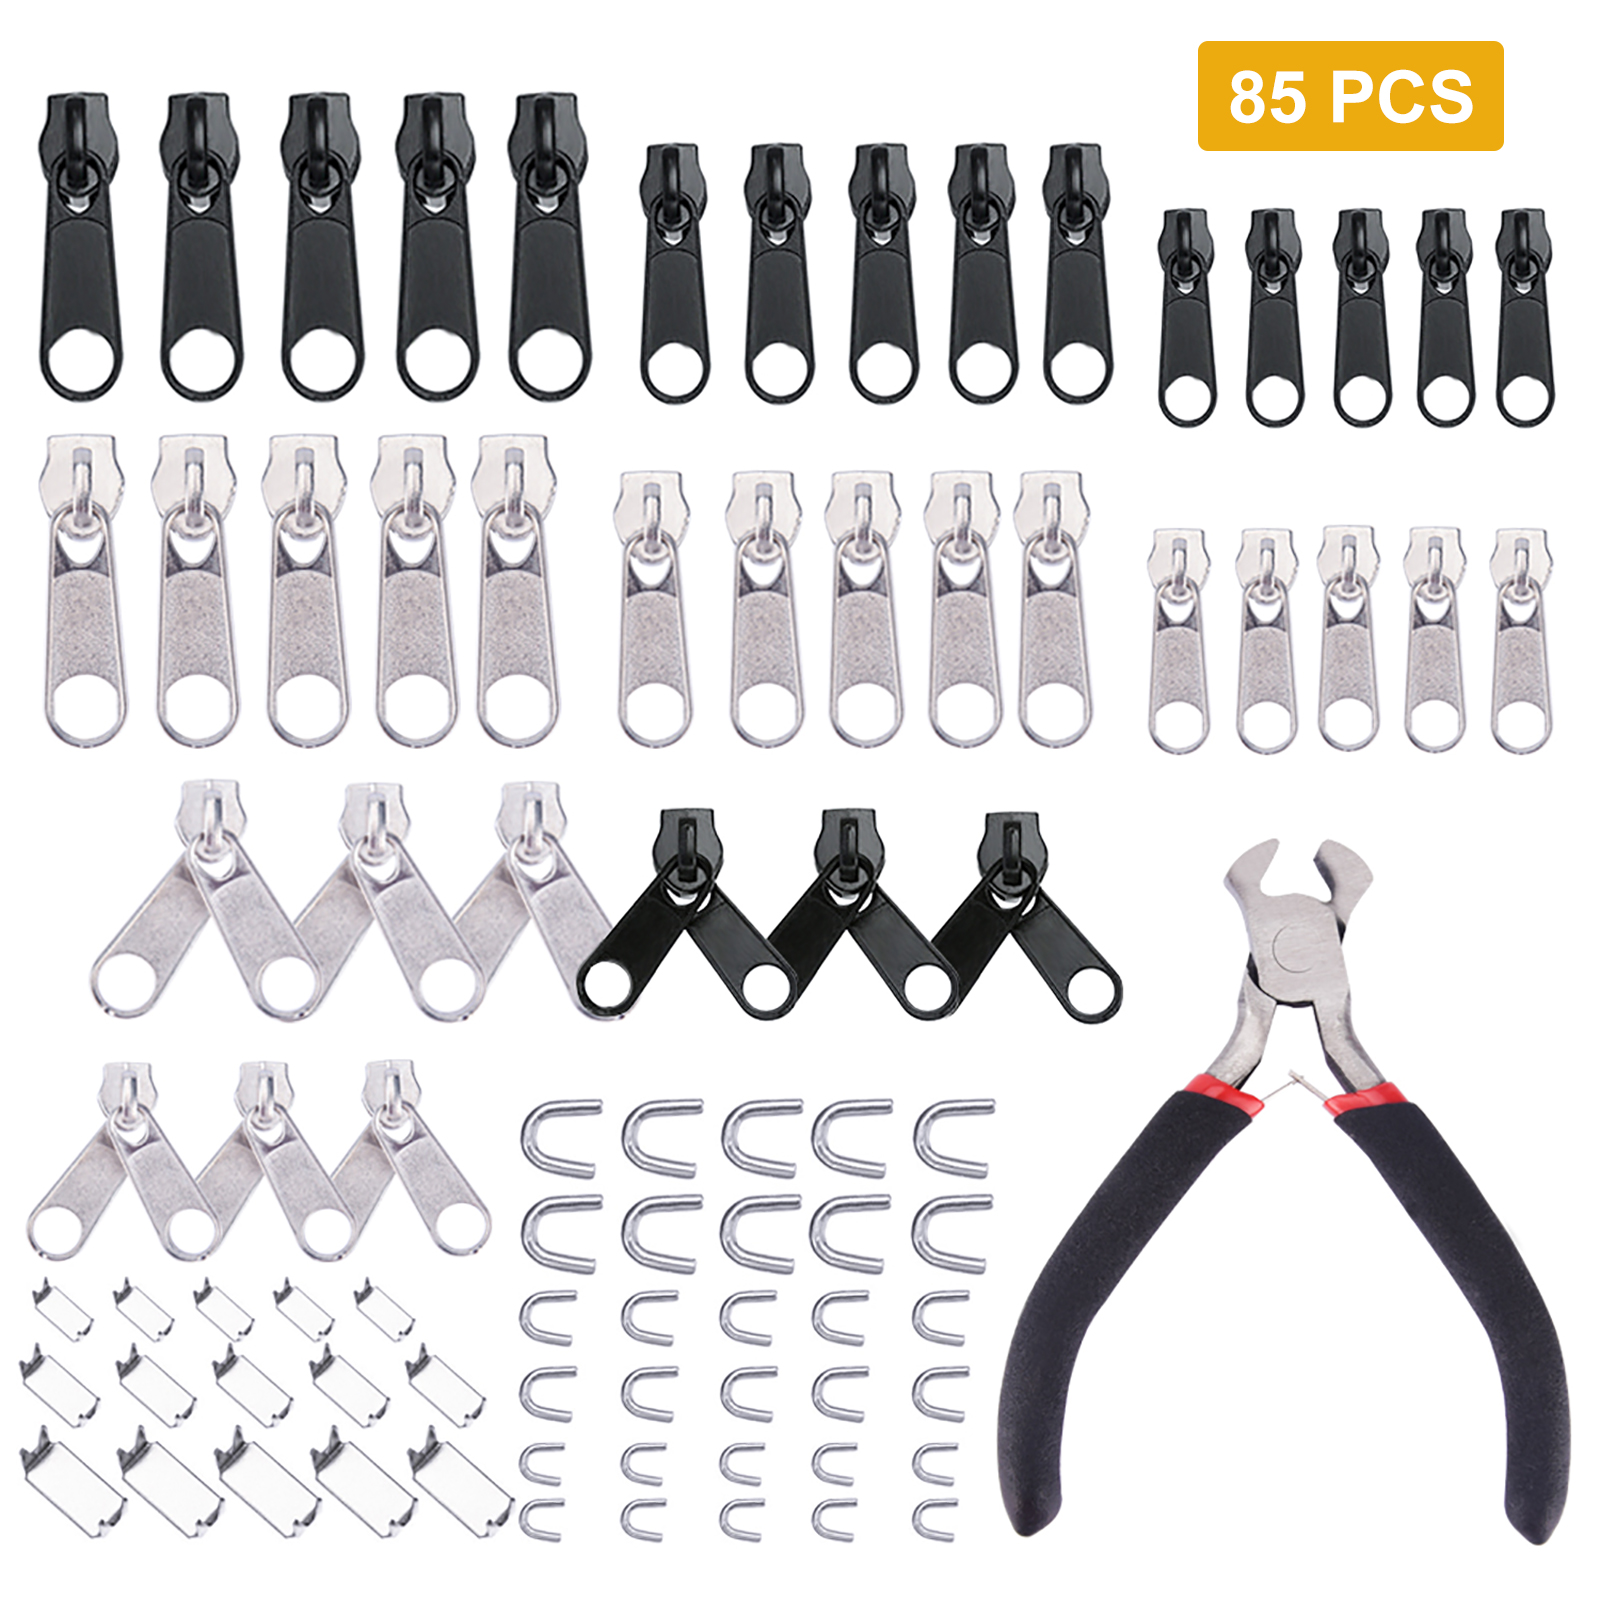 15 Pcs Zipper Pull Replacement Zipper Repair Kit, Premium Zipper Re